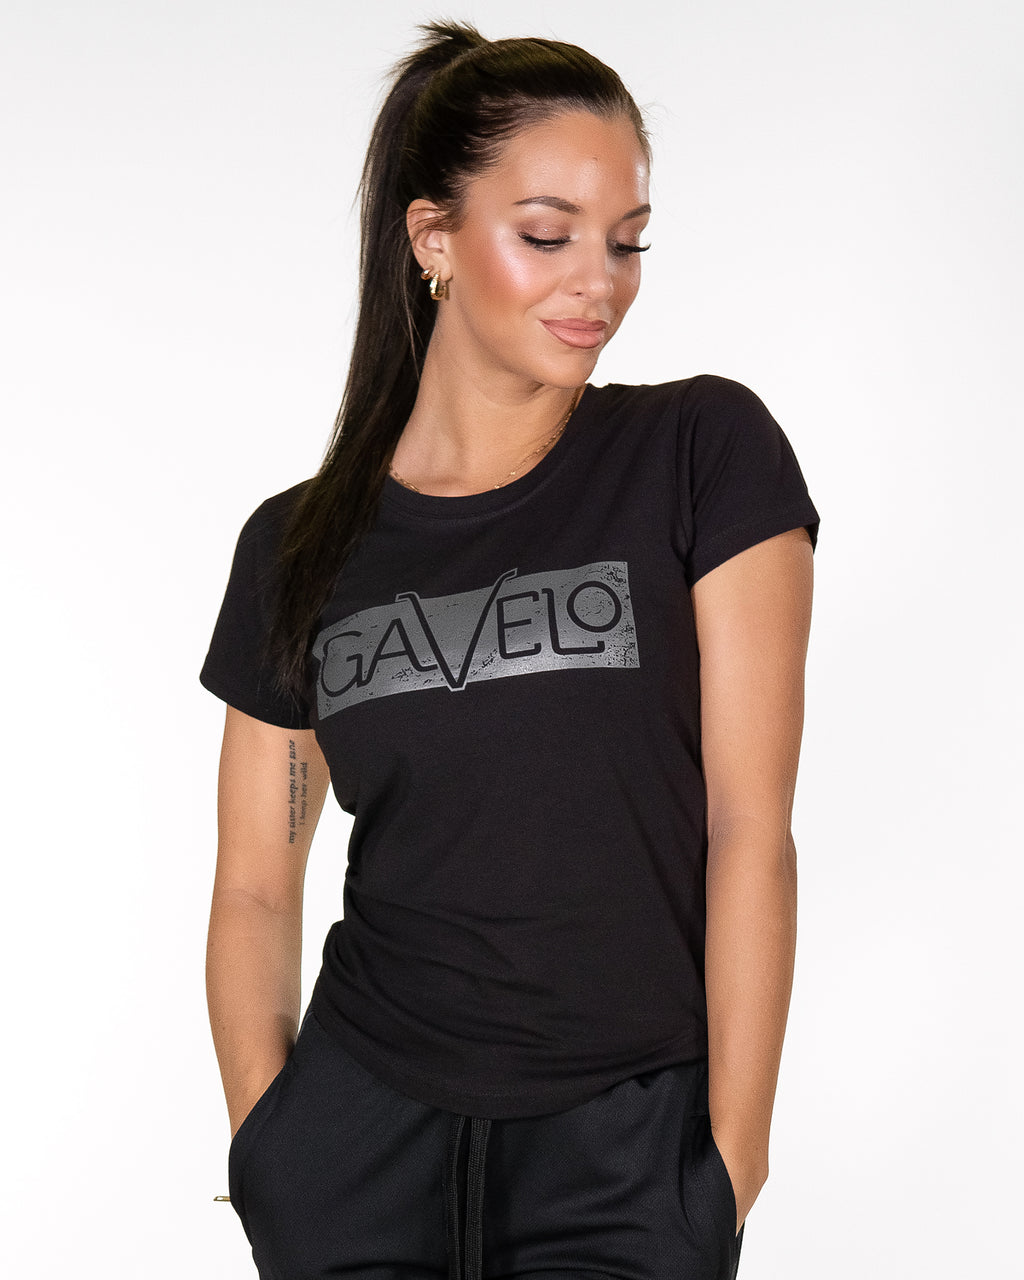 Gavelo Sports Tee - Space Black — MySupplementShop